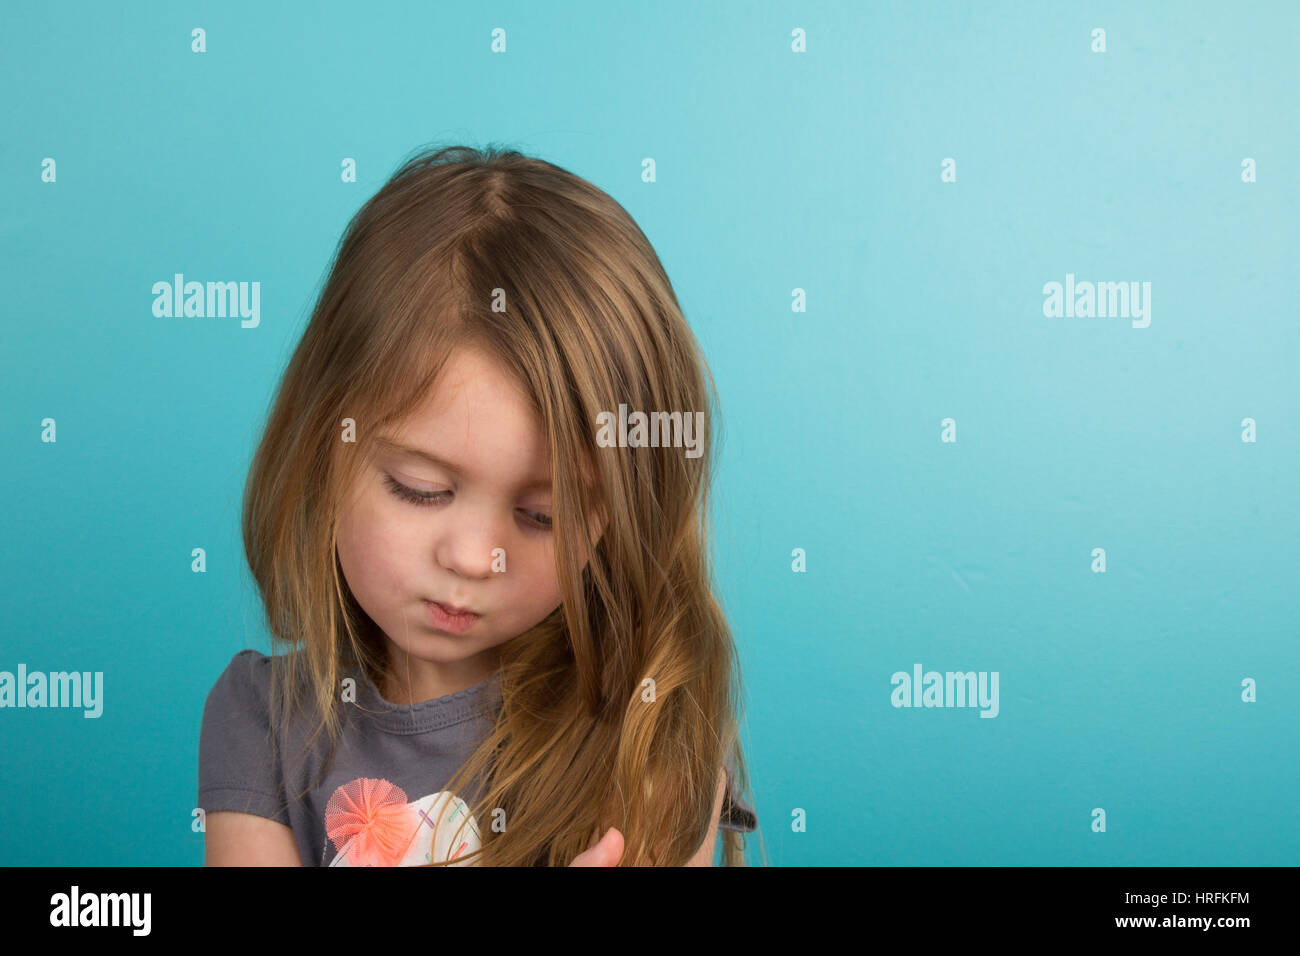 Sad little girl against teal background Stock Photo